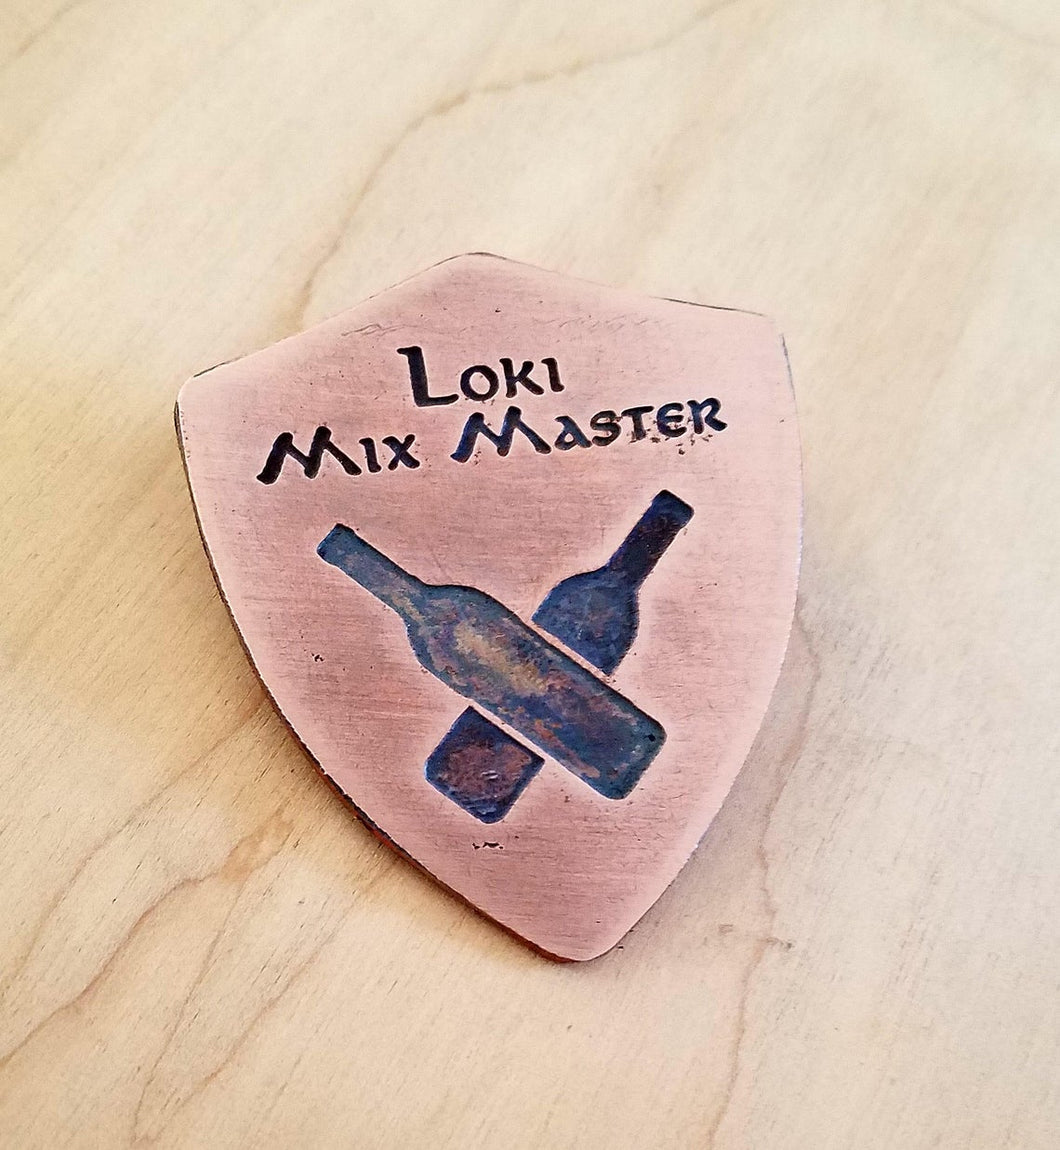 Loki Mixmaster Medallion Pin